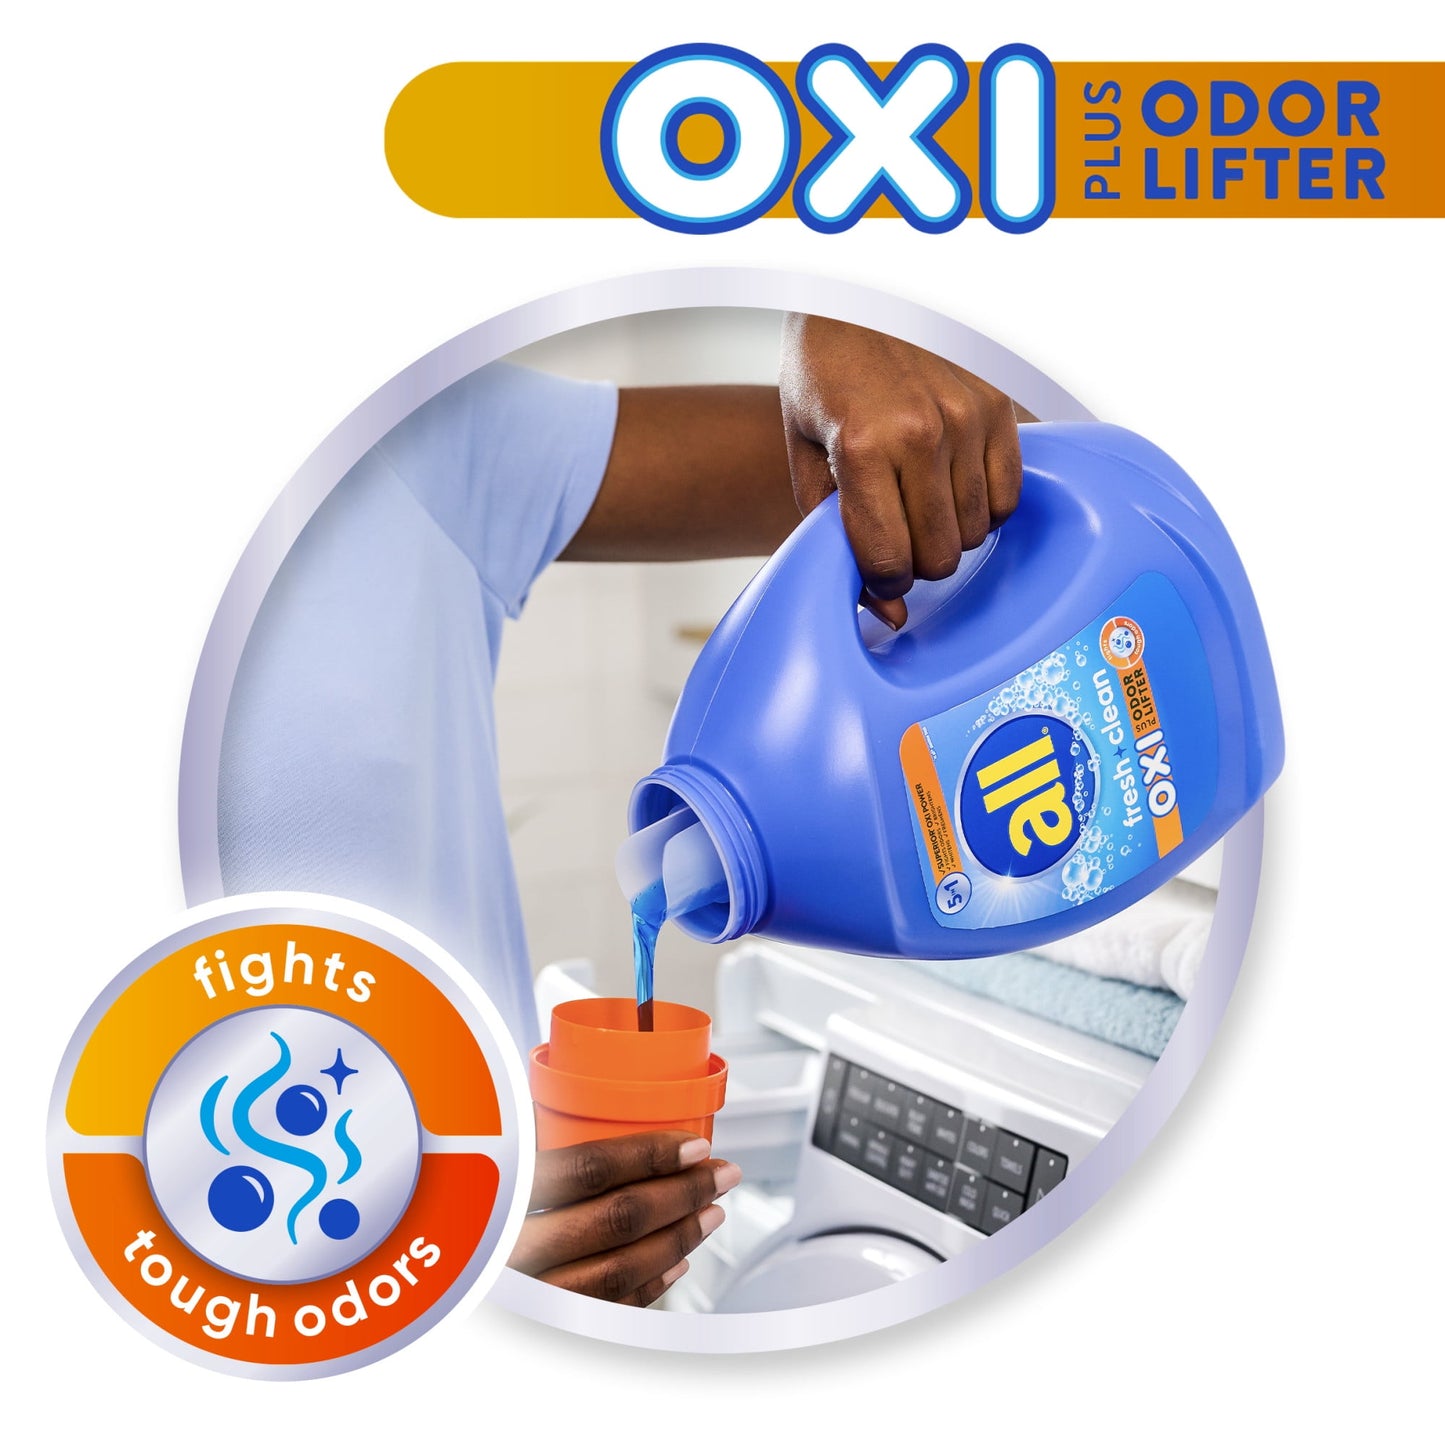 all Liquid Laundry Detergent, Fresh Clean Oxi plus Odor Lifter, 195 fl oz, 109 Loads